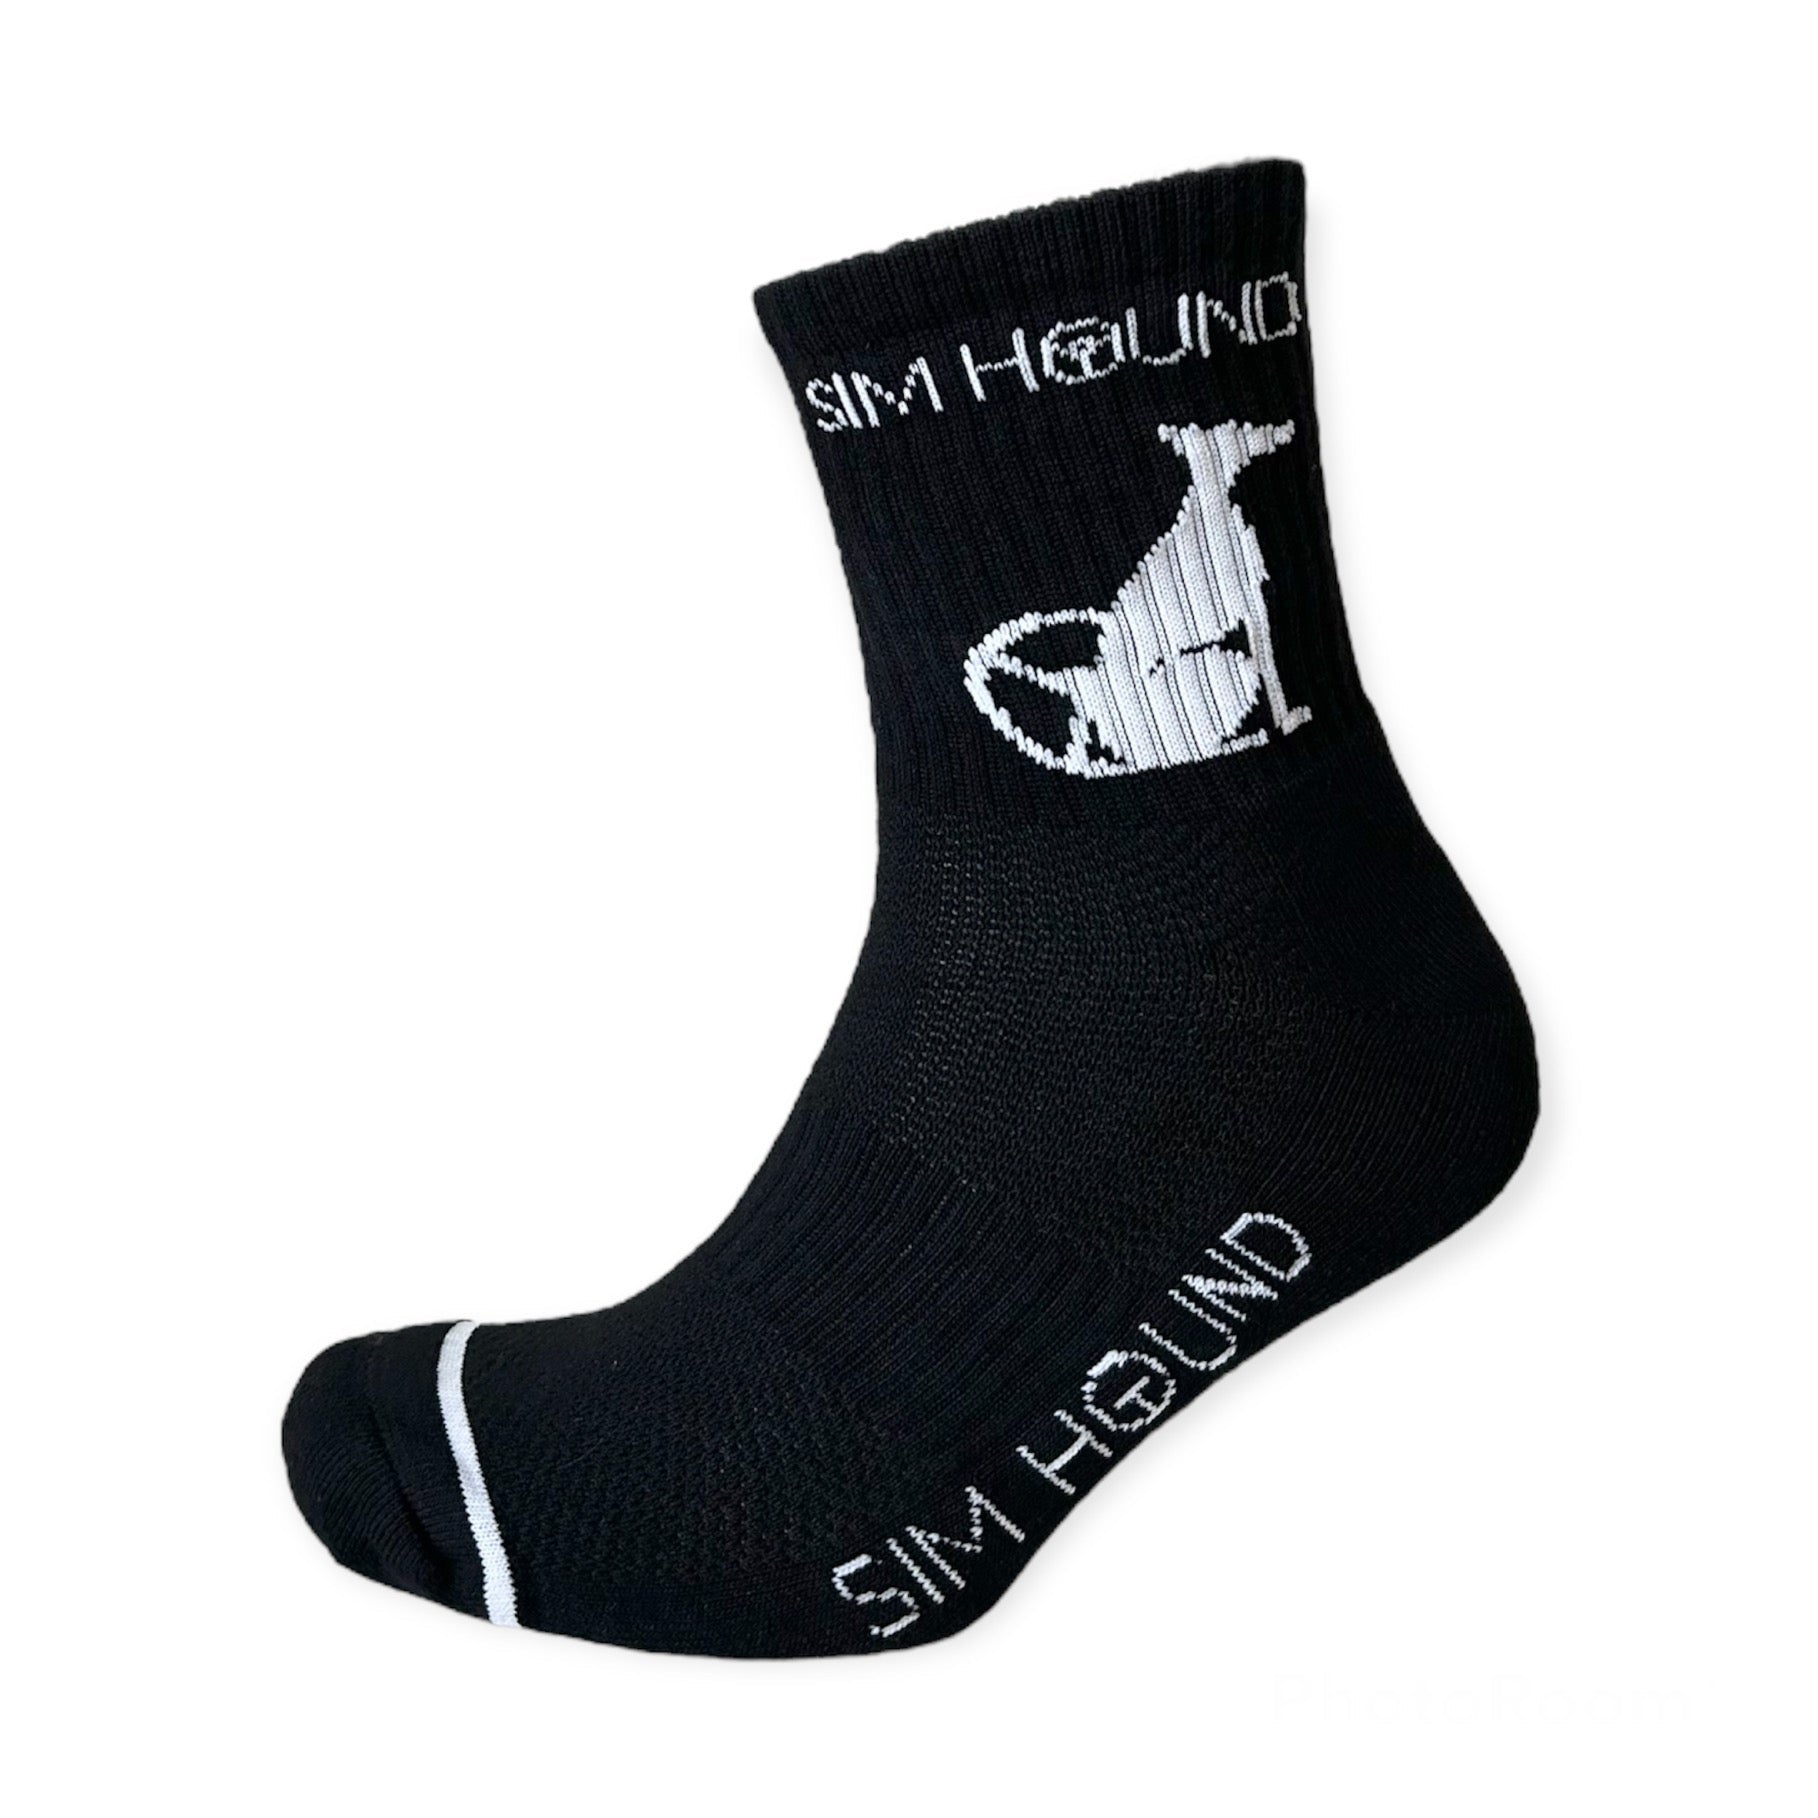 Sim Hound Sim Racing Socks - 1 Pair